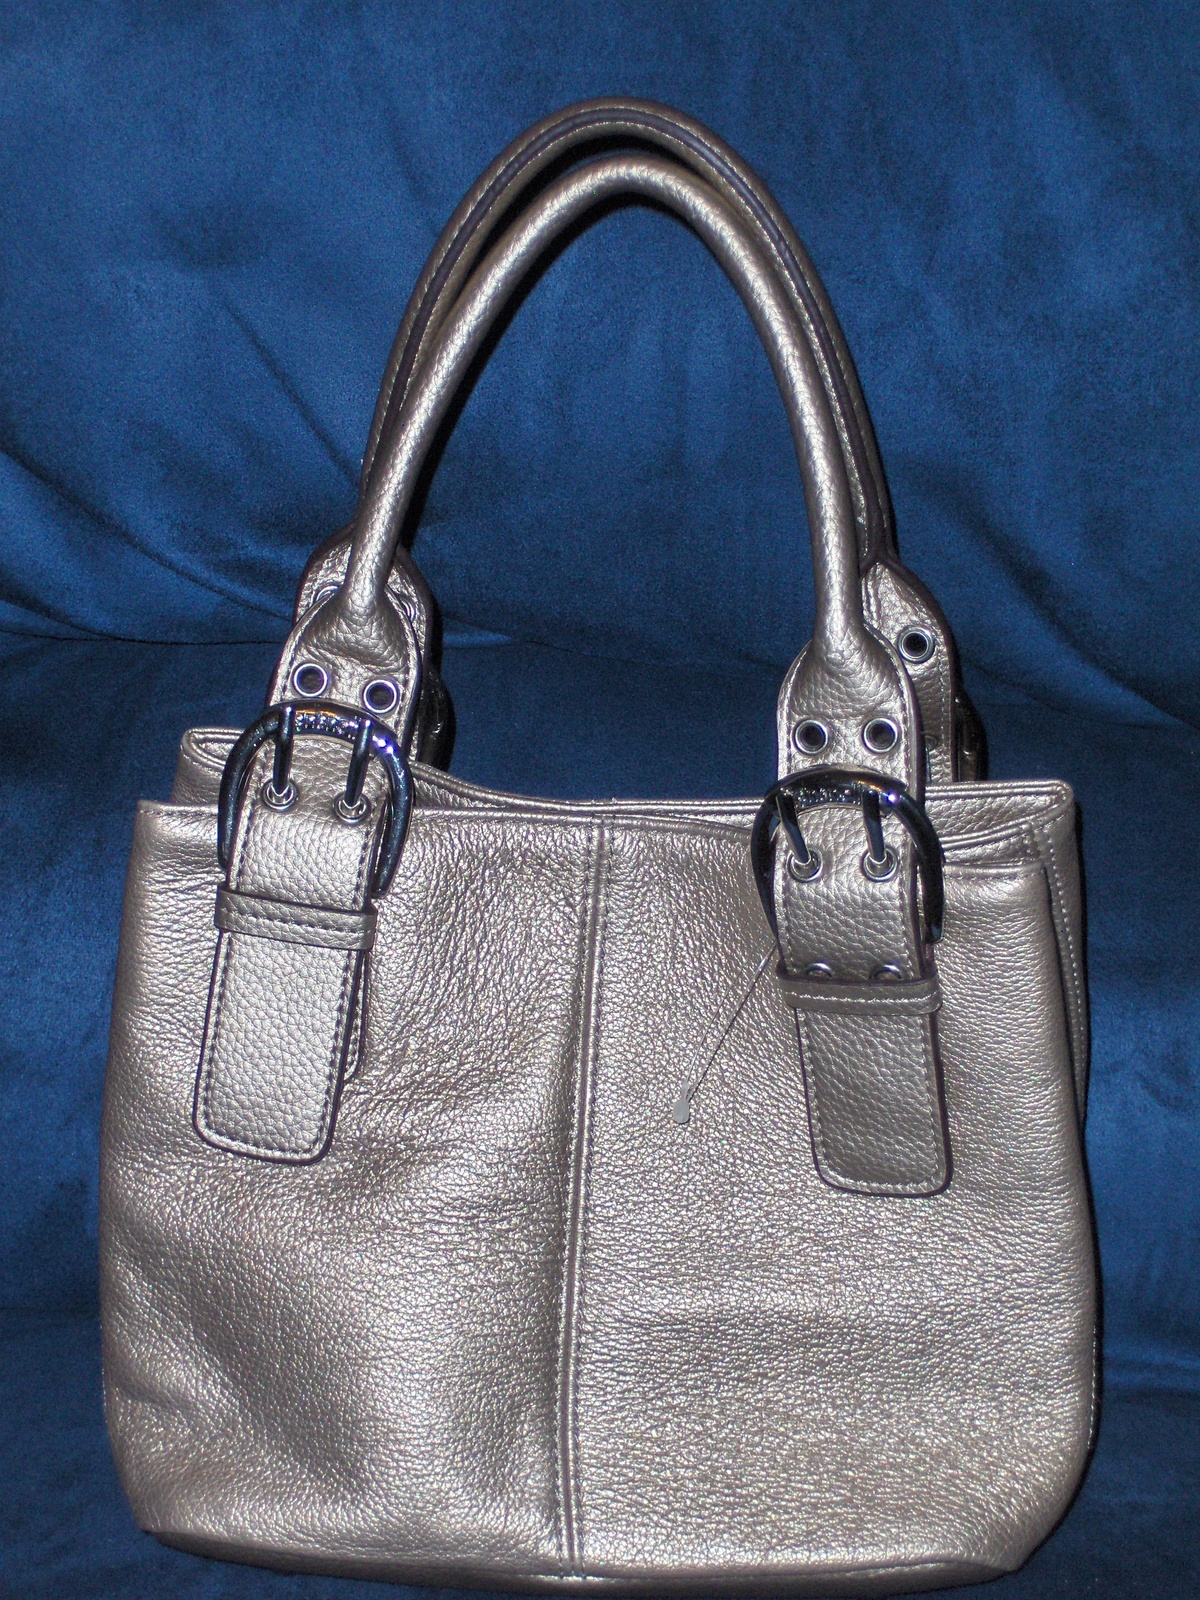 Tignanello Satchel Gold Pebble Grain Leather Handbag Purse Tote Bag ...